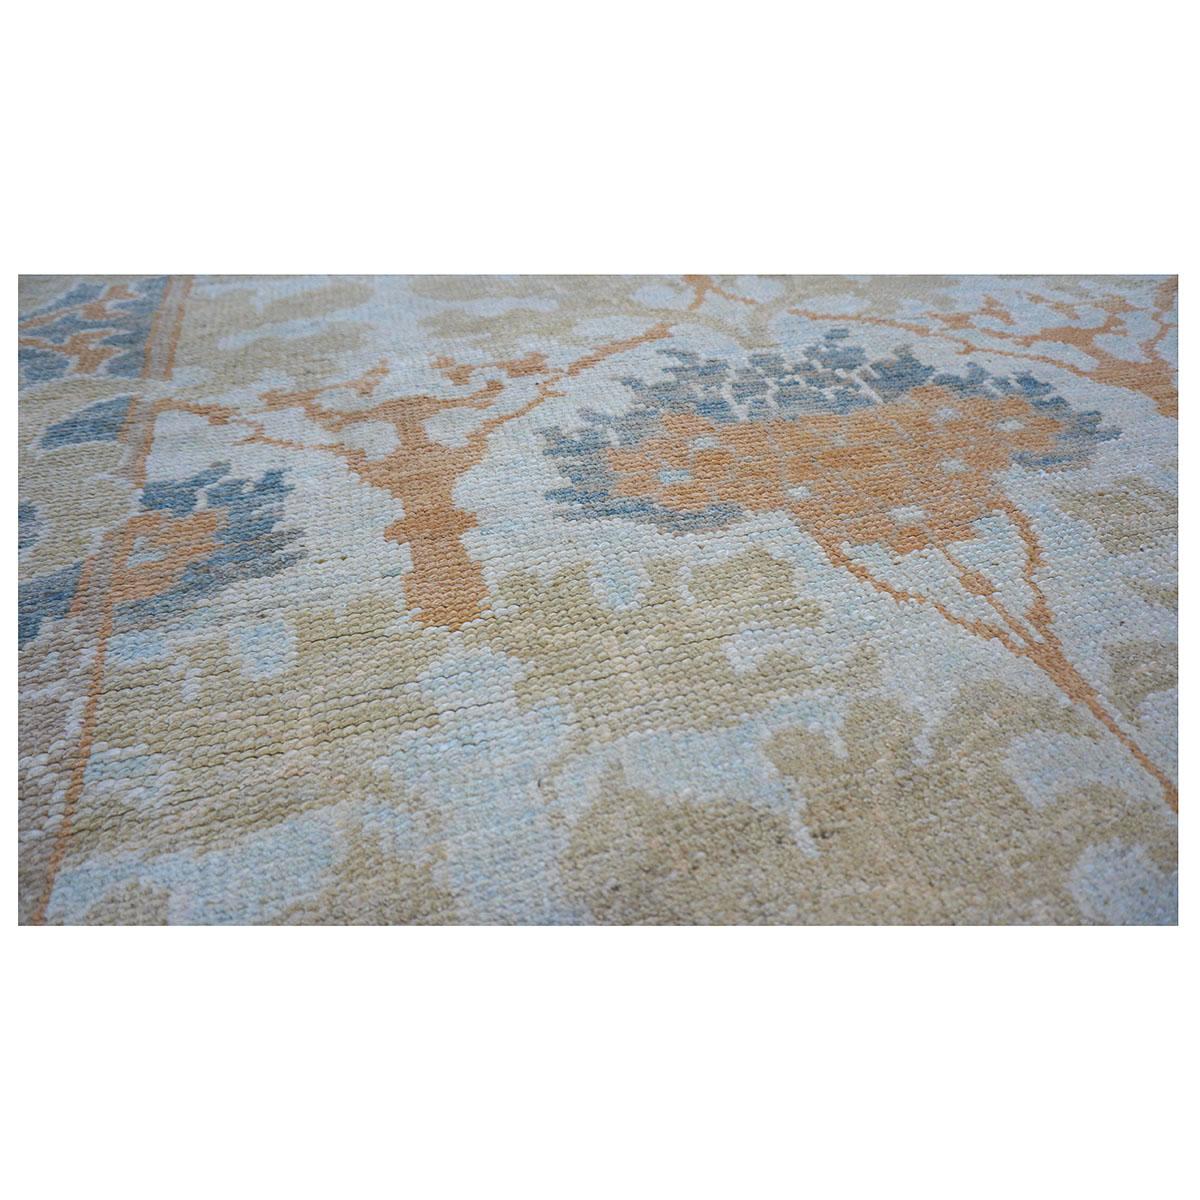 Turkish 21st Century William Morris Donegal Carpet Light Blue and Orange For Sale